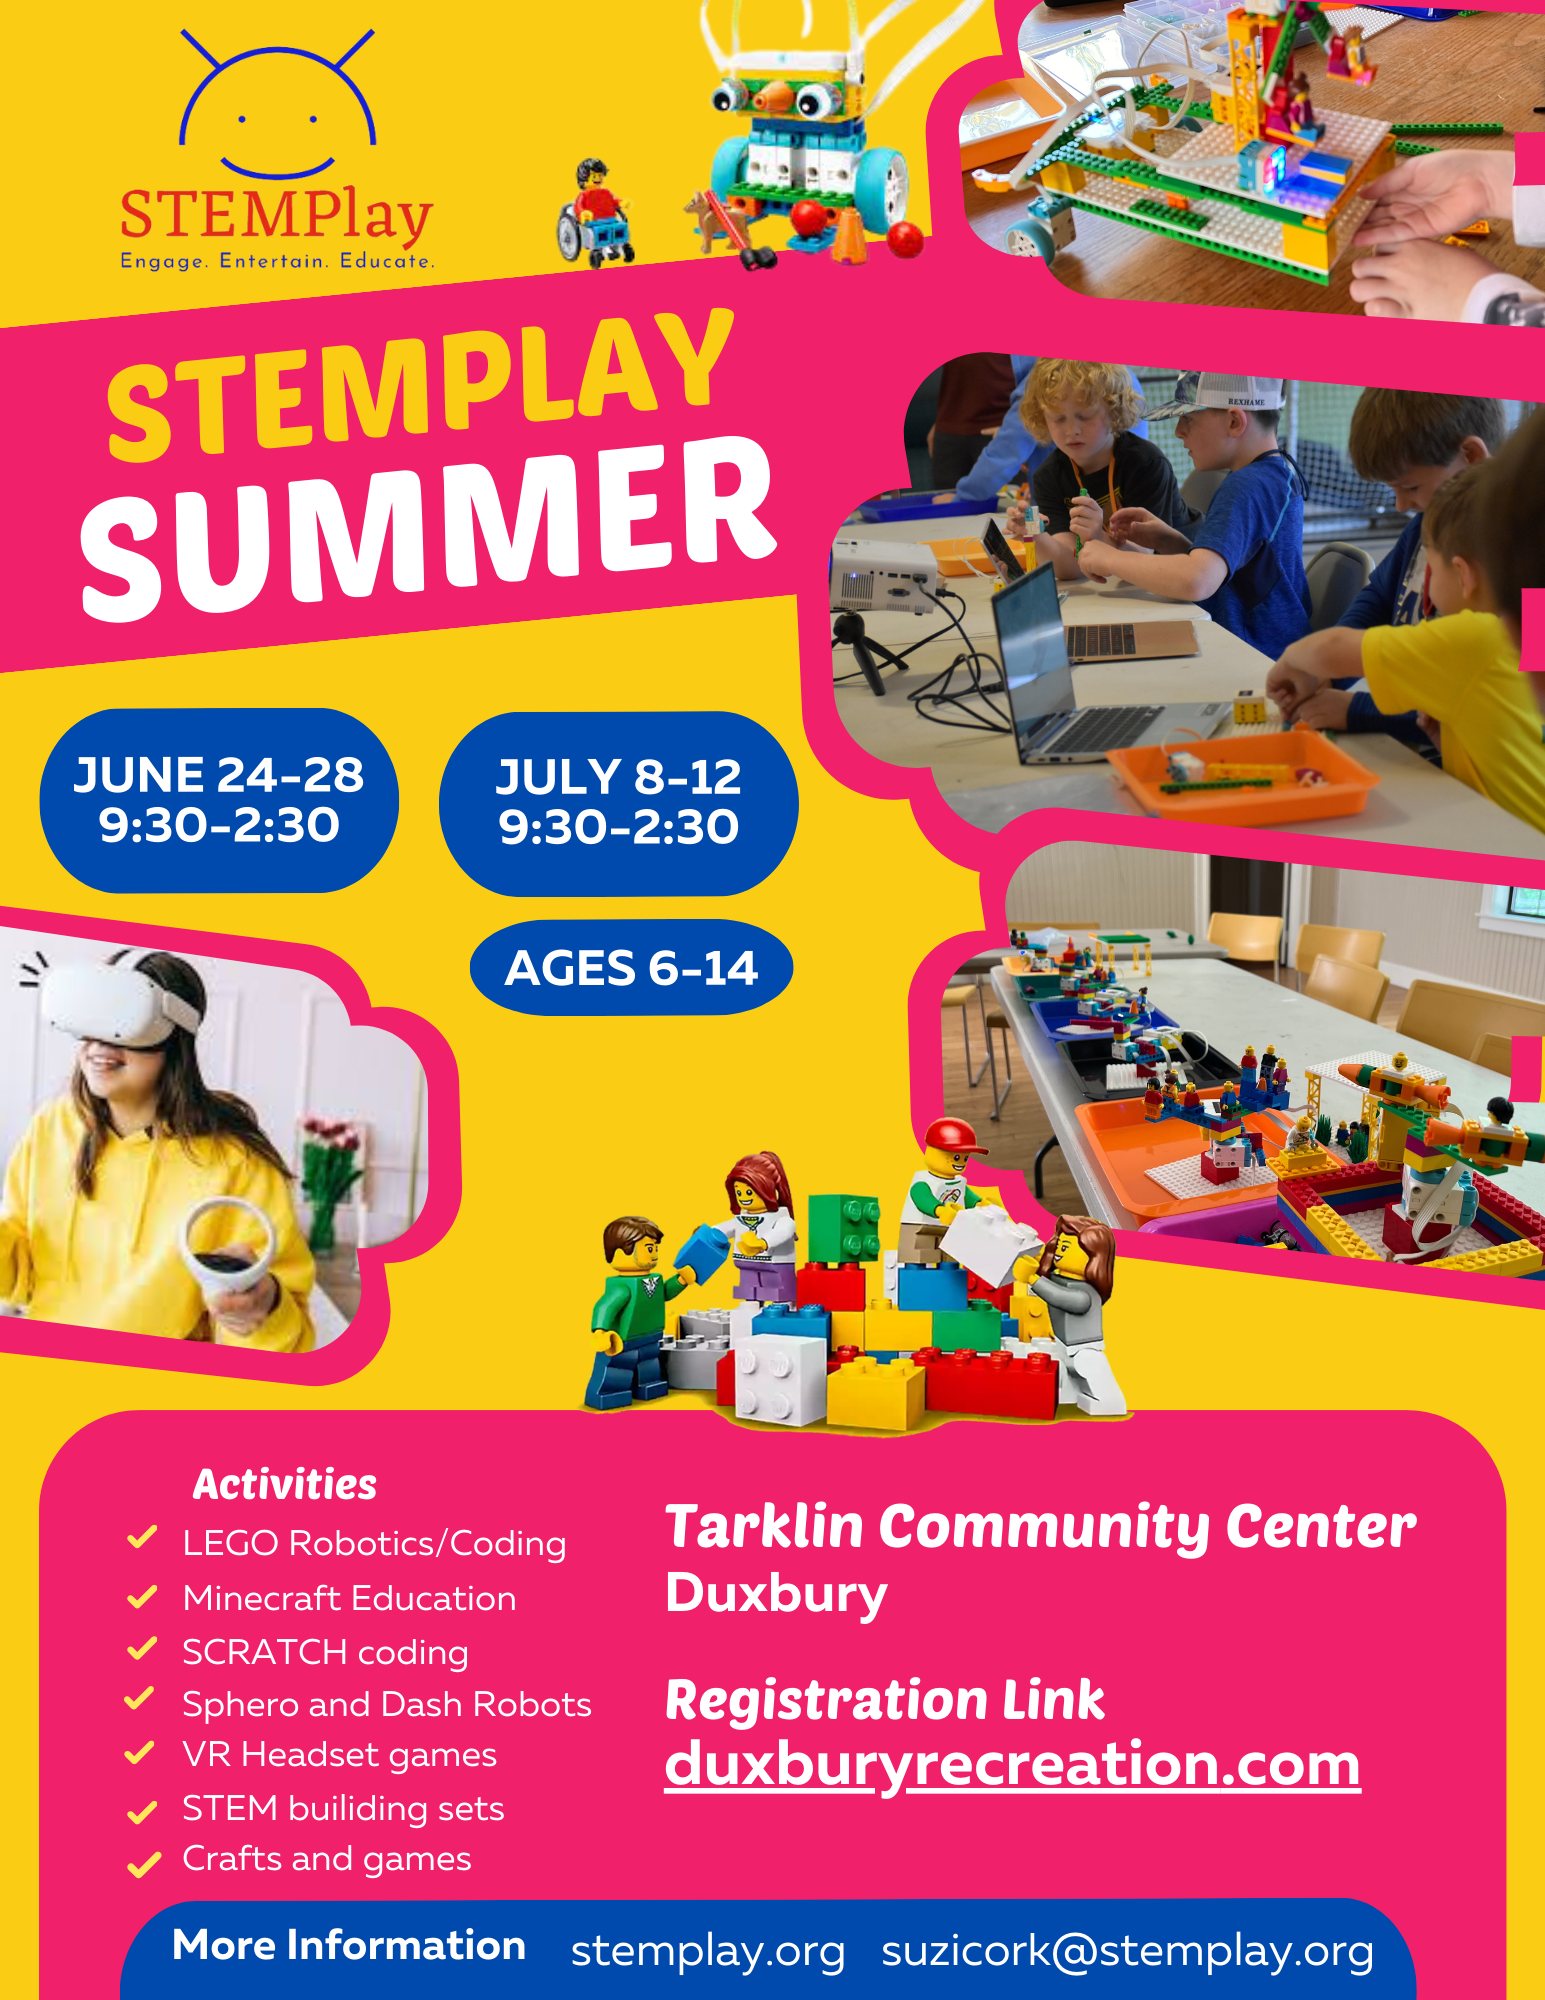 Summer StemPlay through Duxbury Recreation Department.  Please visit duxburyrecreation.com for more information and to register